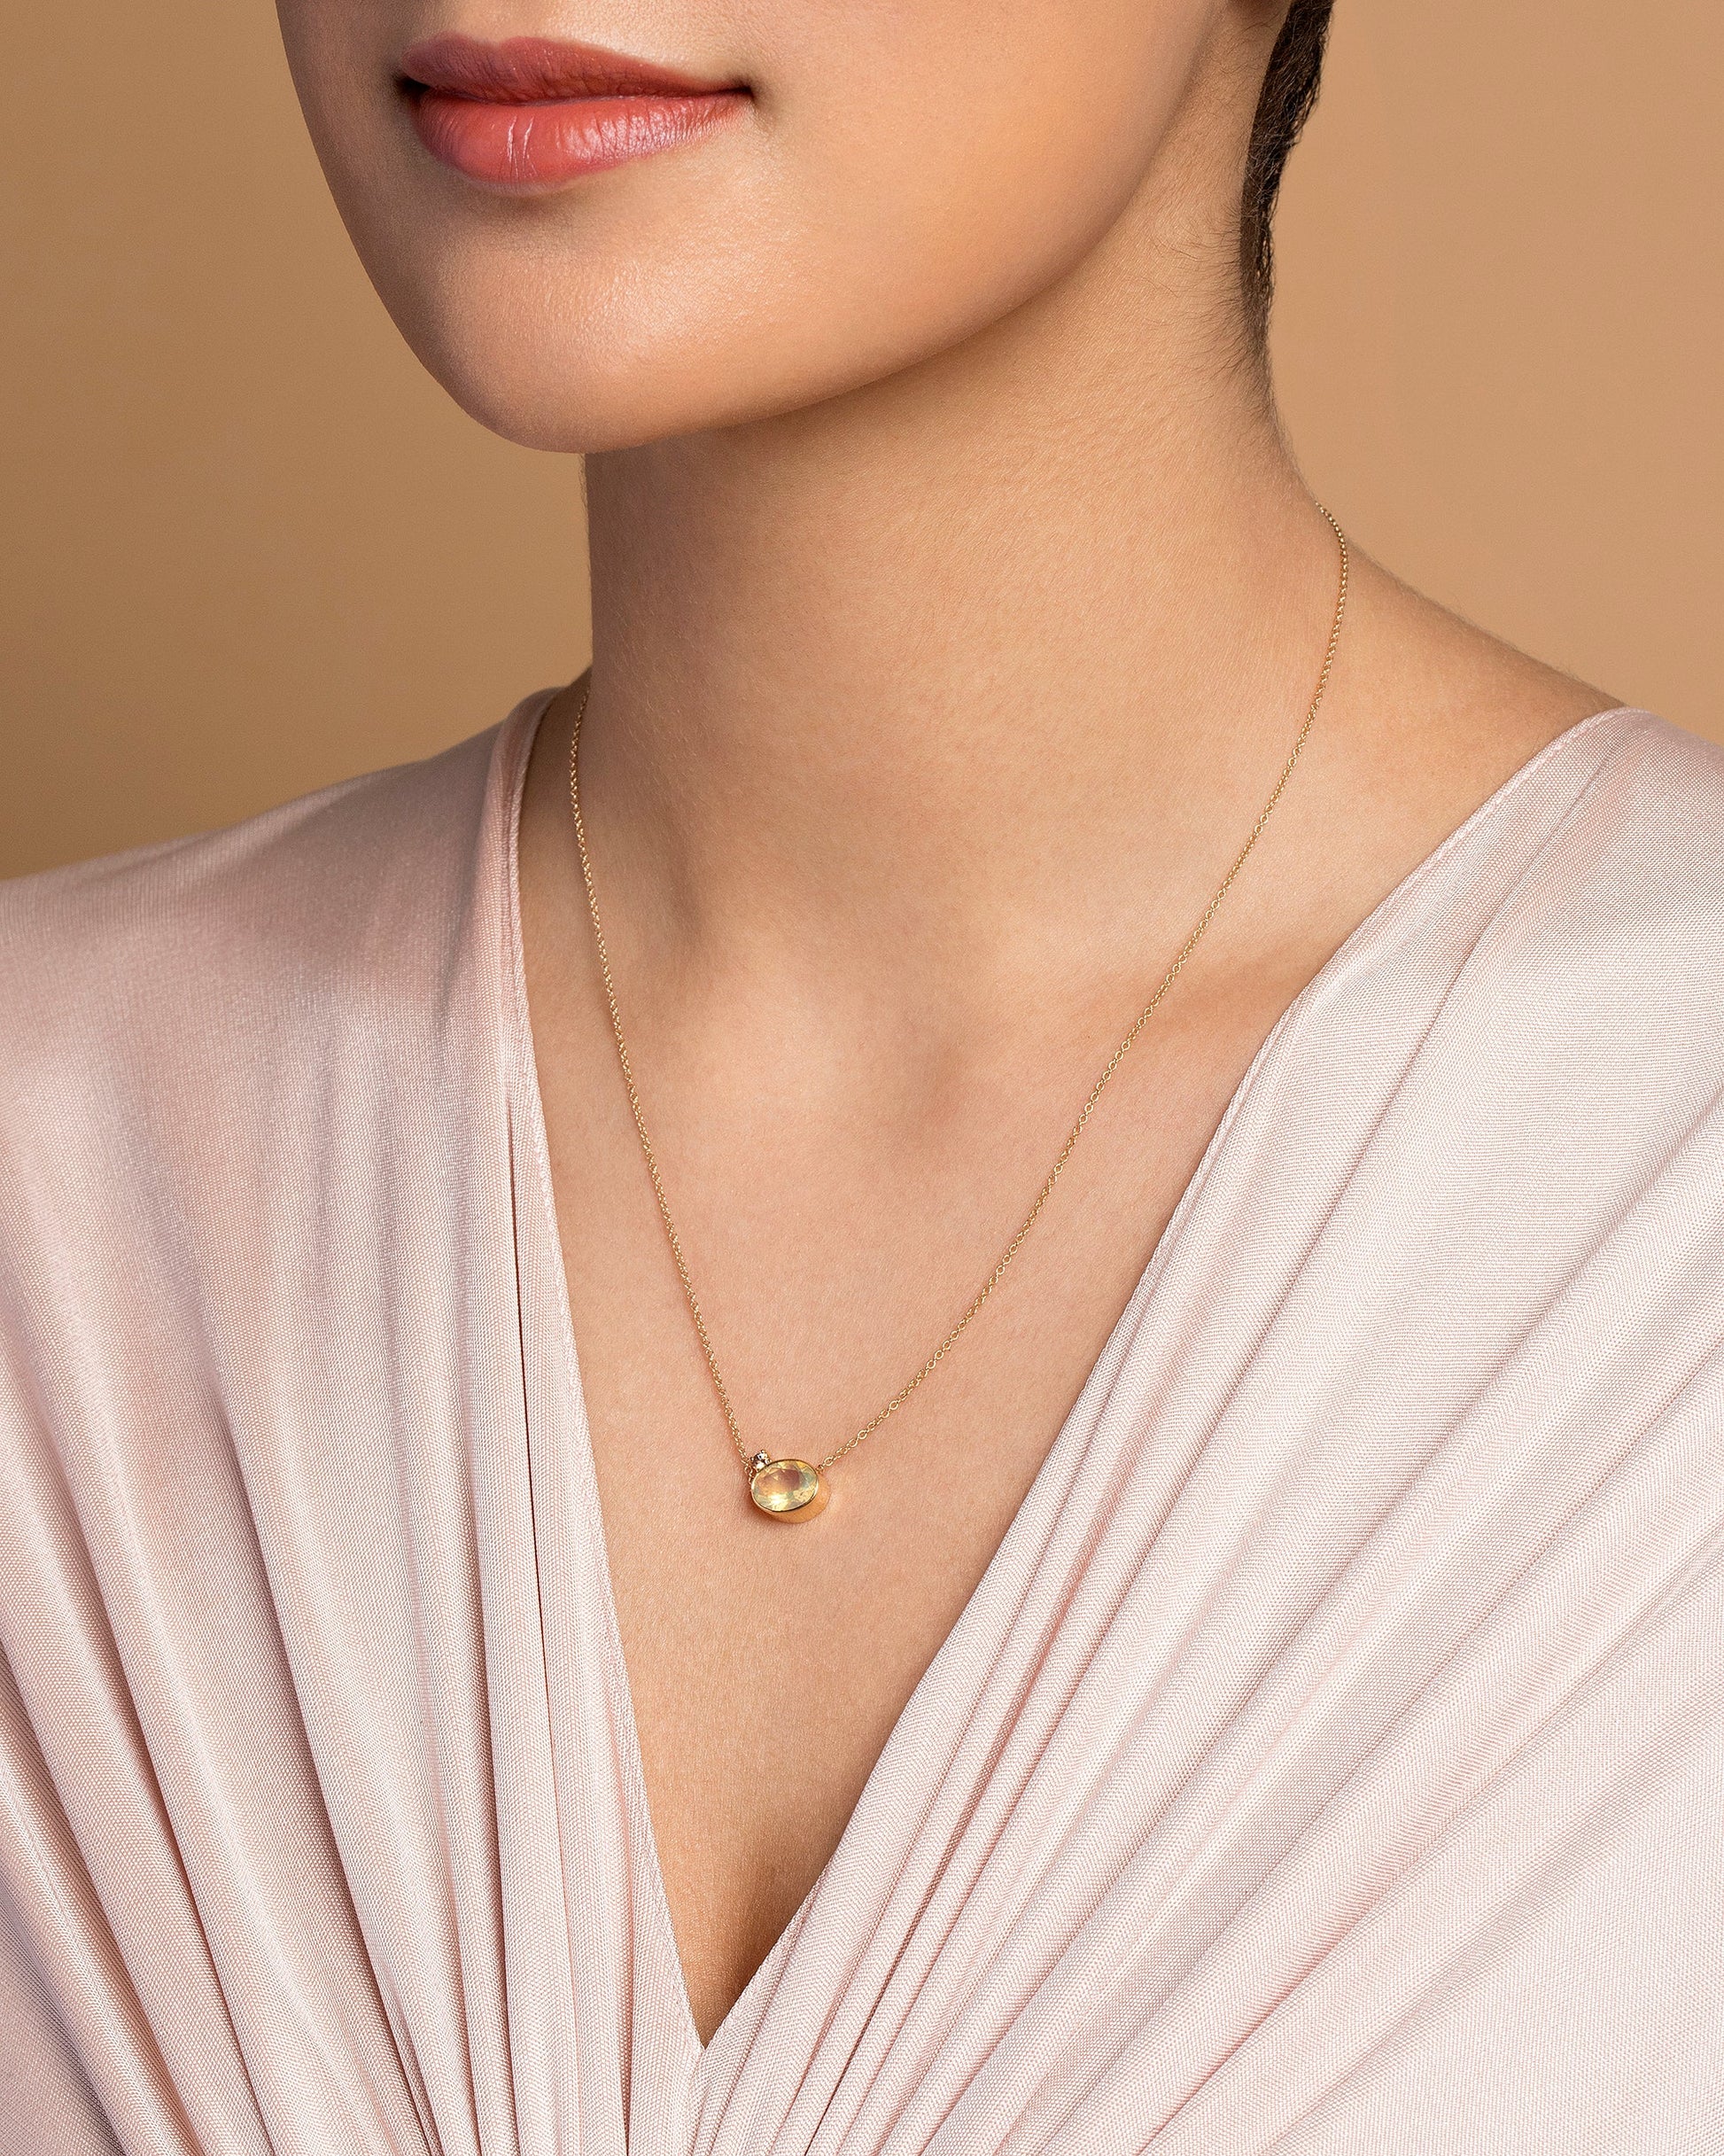 Oregon Opal Necklace on model.